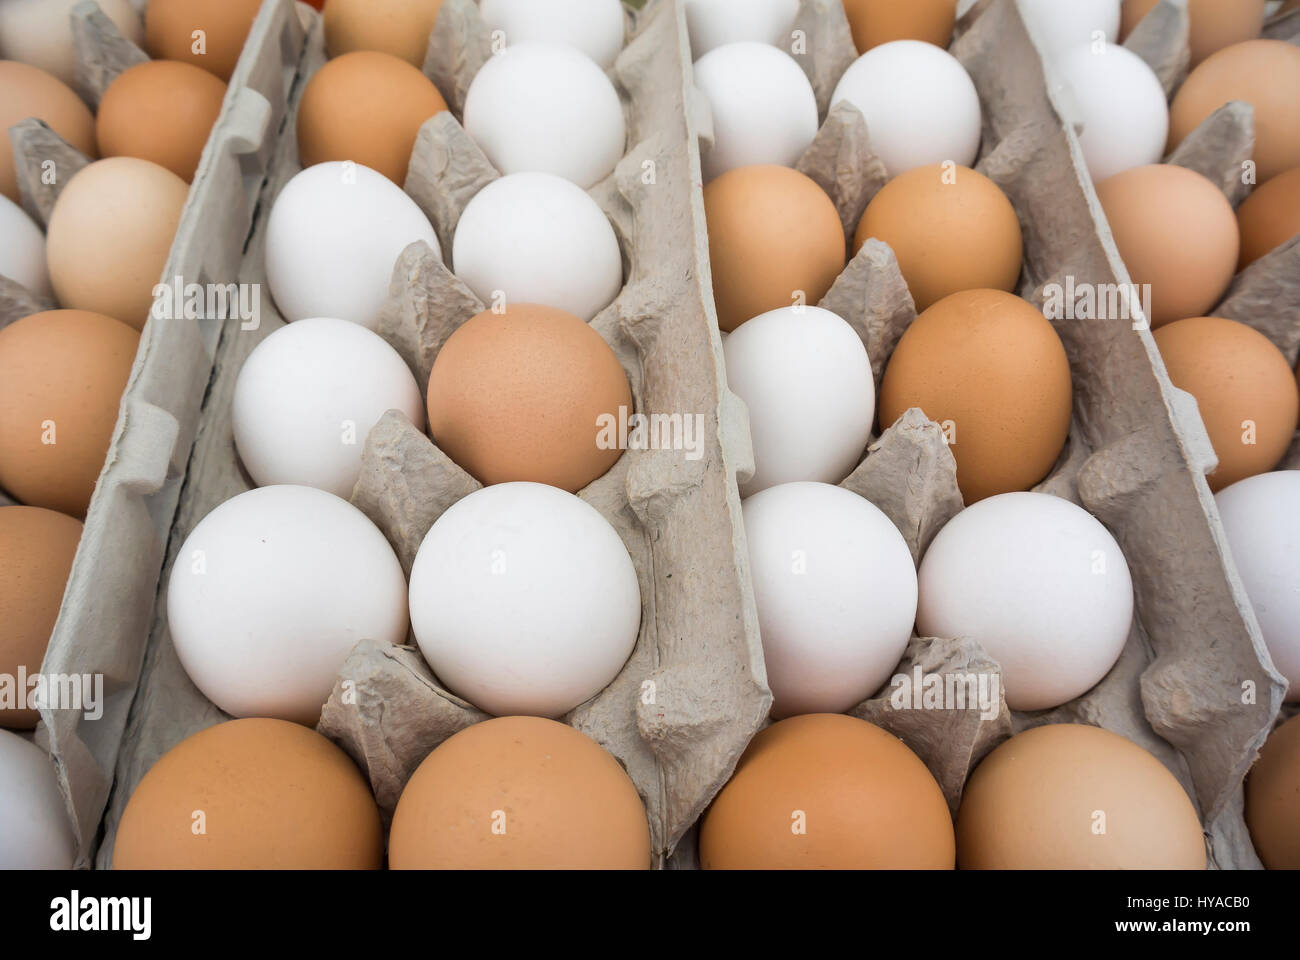 Eggs on Display at Farmer's Market Stock Photo